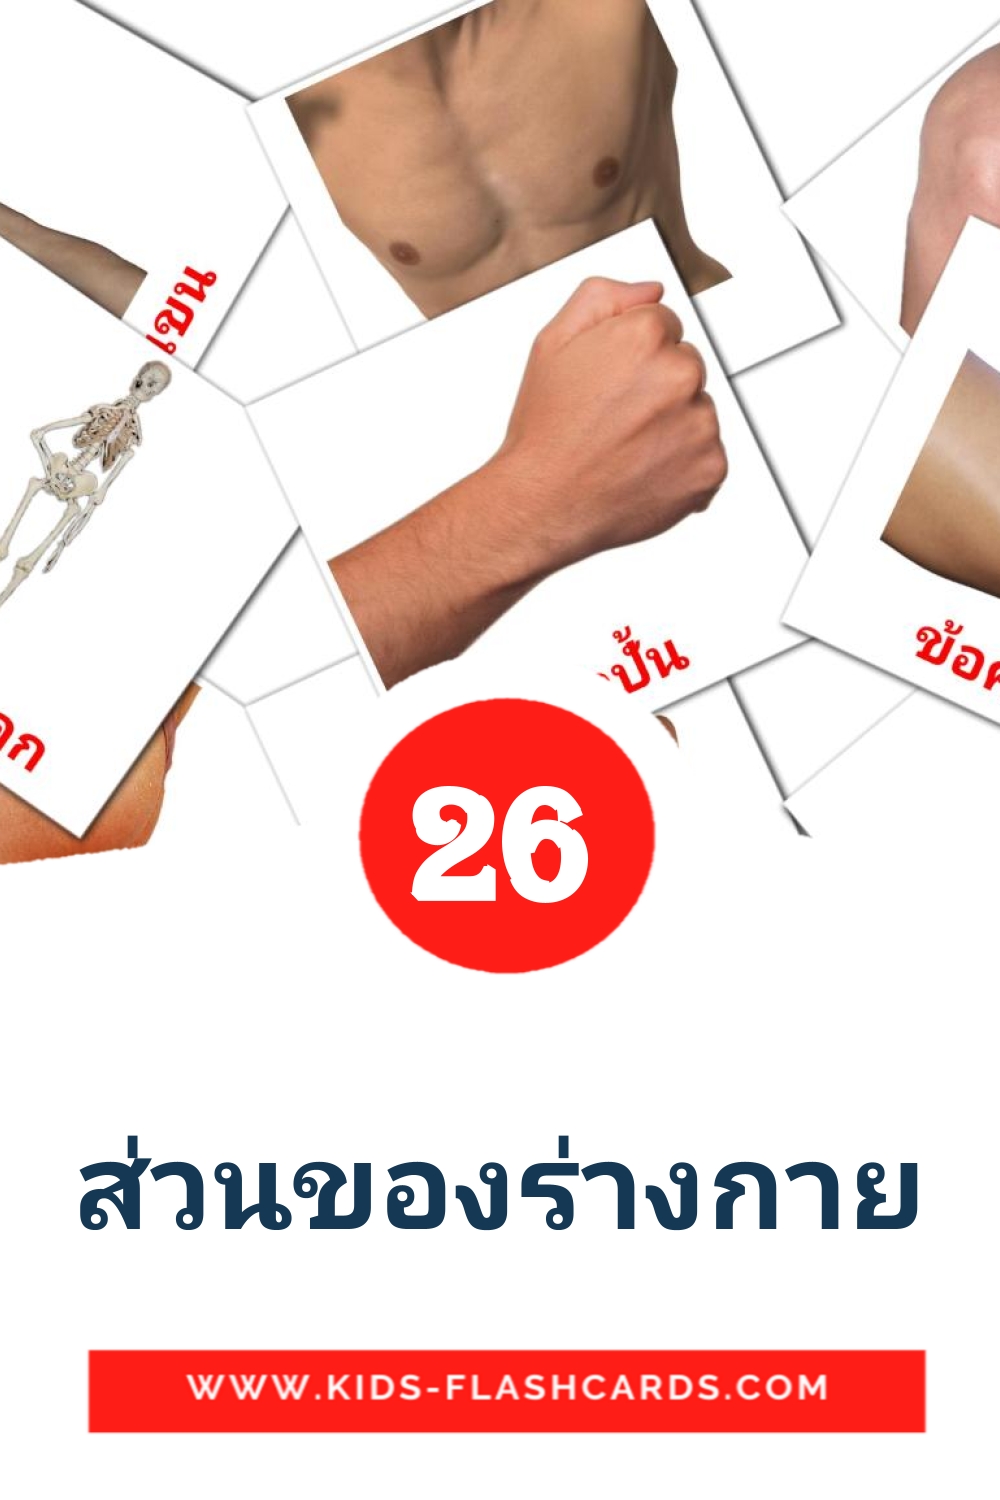 26 carte illustrate di ส่วนของร่างกาย per la scuola materna in tailandese